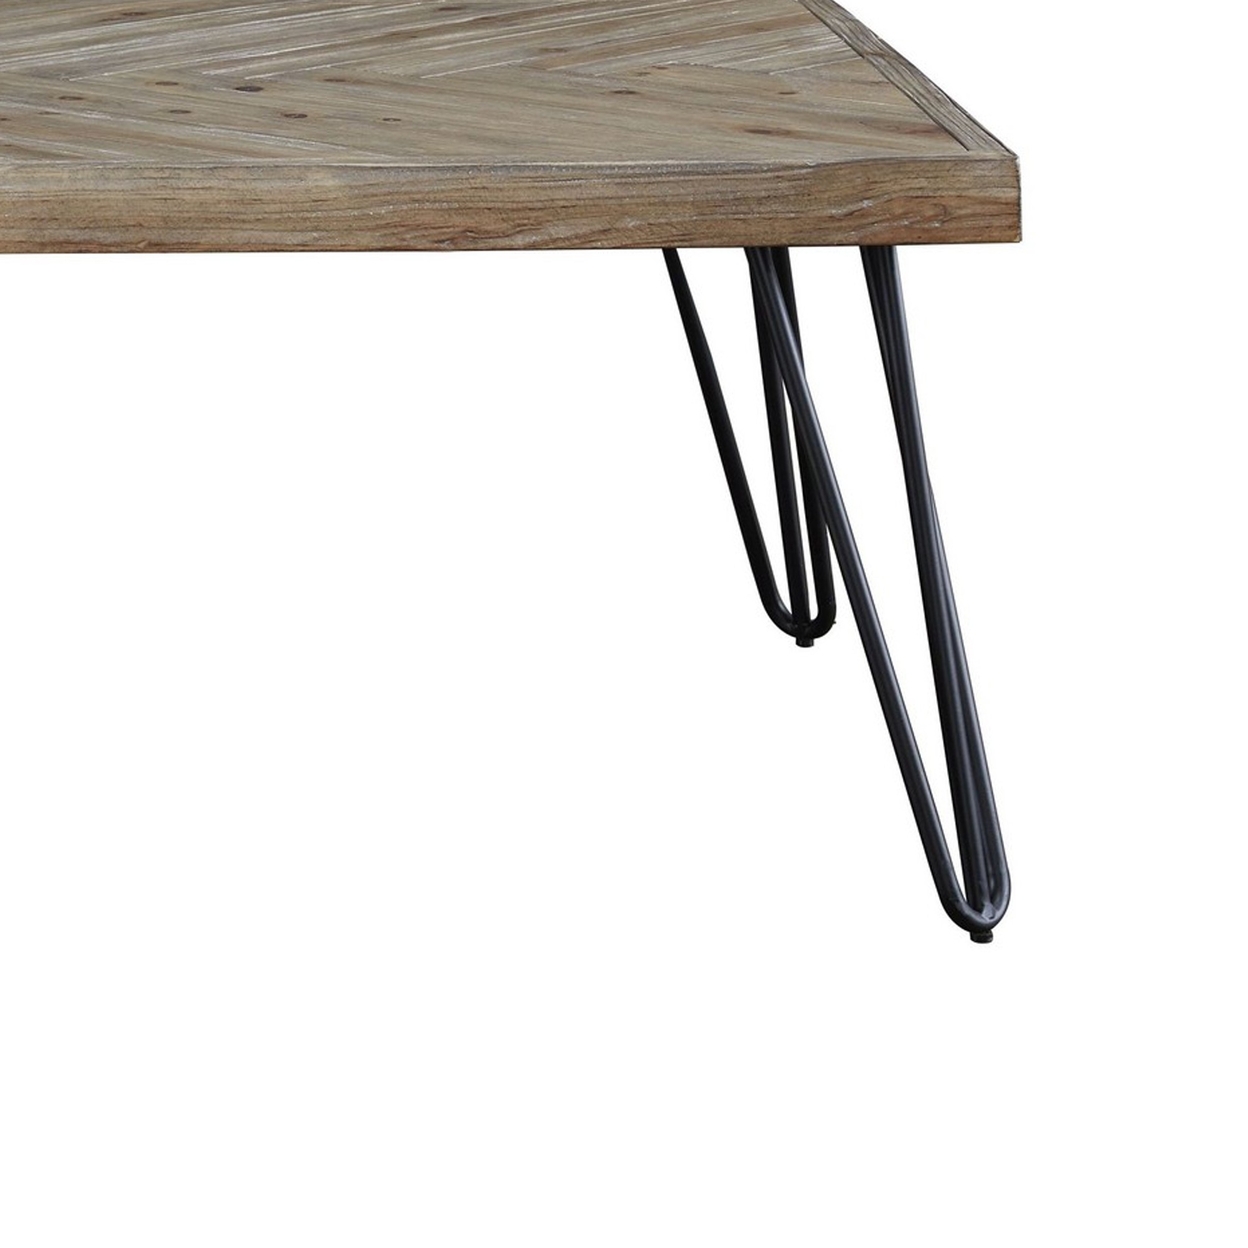 Anne 48 Inch Console Table, Herringbone Wood Surface, Black Hairpin Legs- Saltoro Sherpi